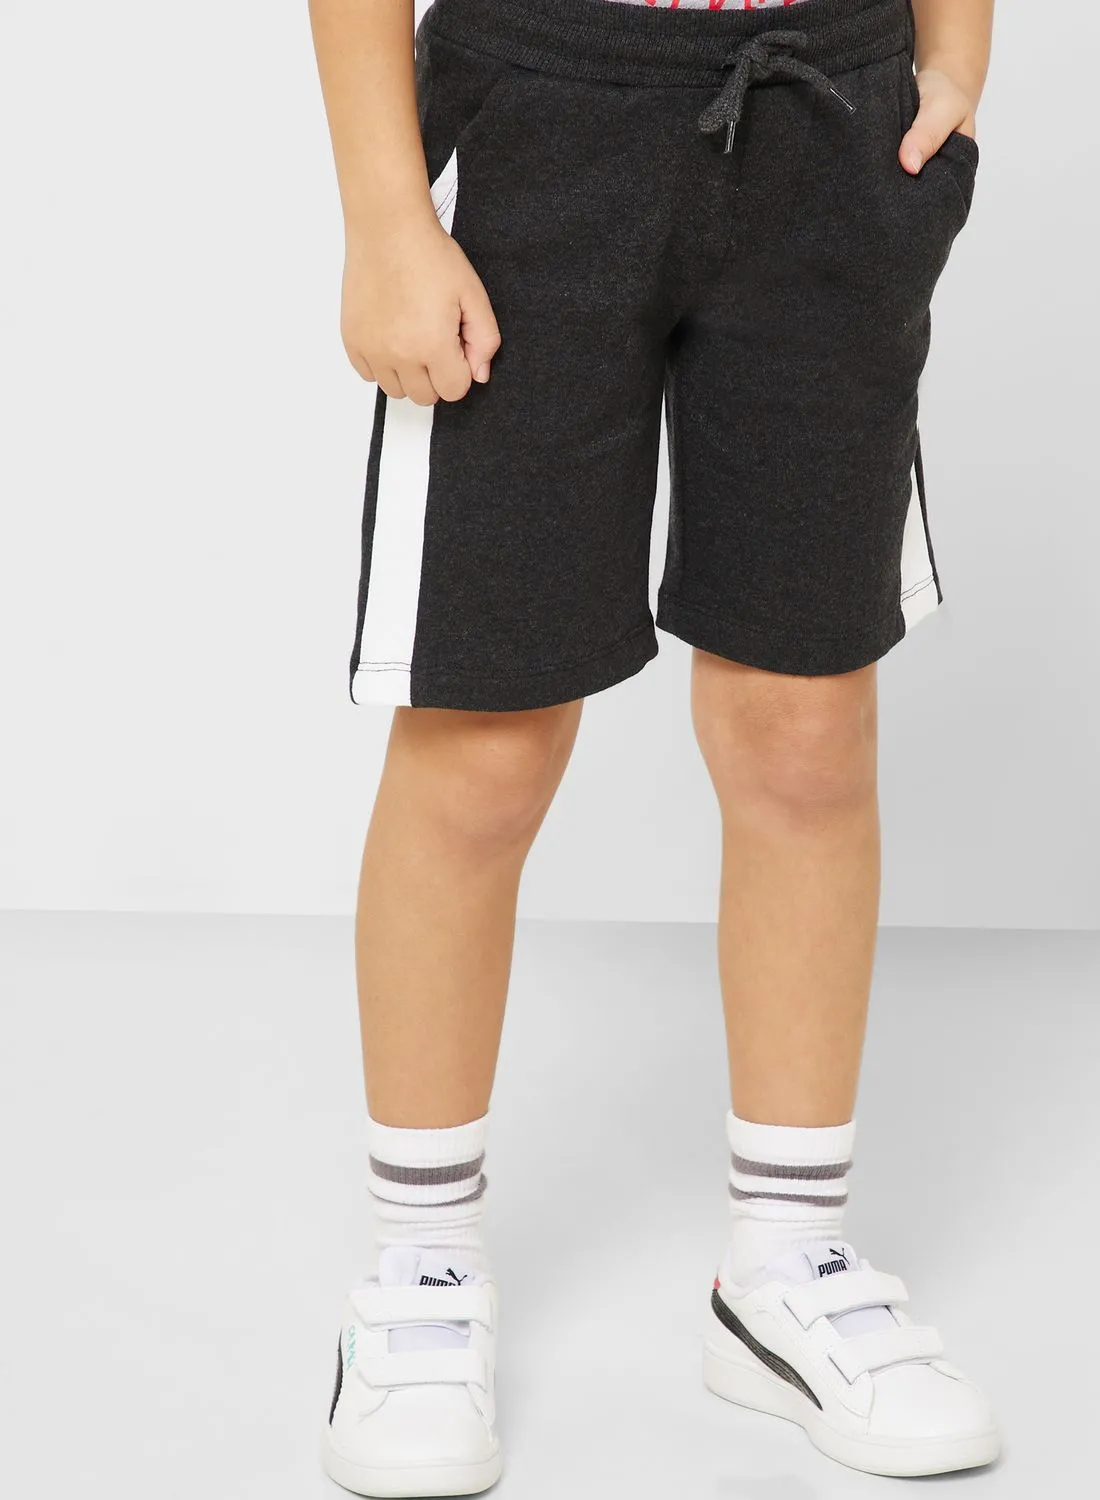 Pinata Cut & Sew Shorts For Boys